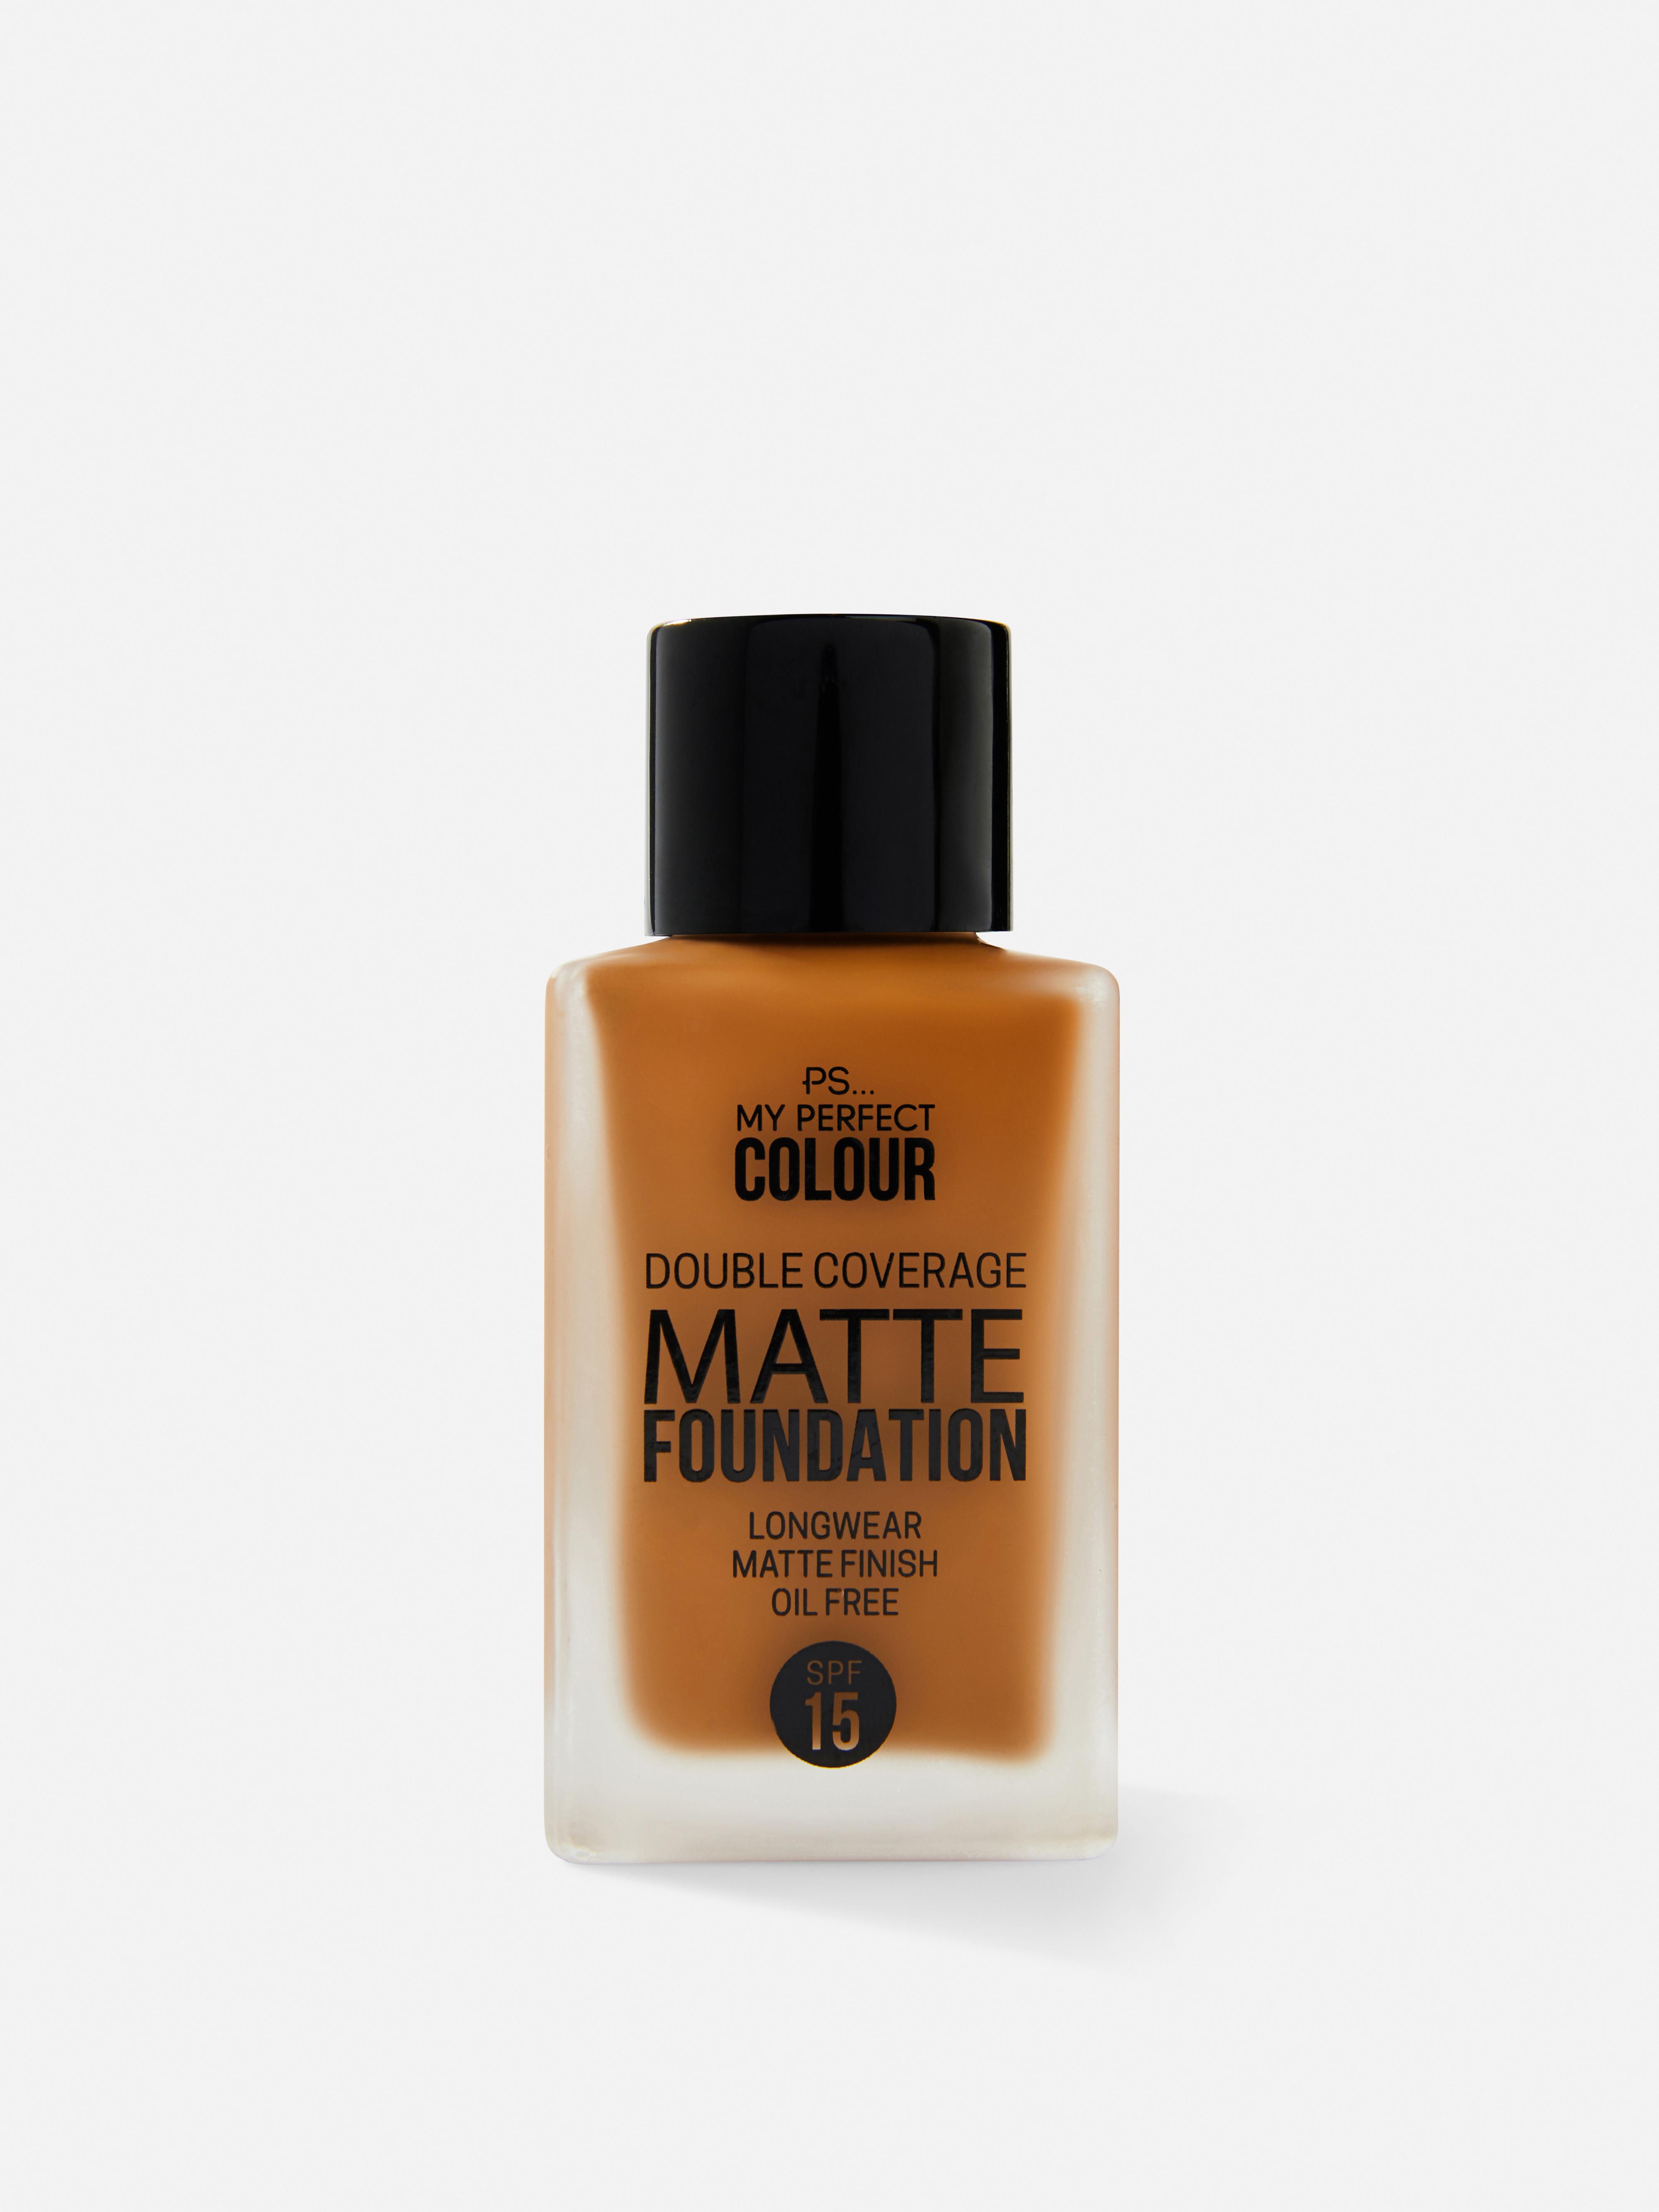 PS... My Perfect Colour Matte Foundation Caramel